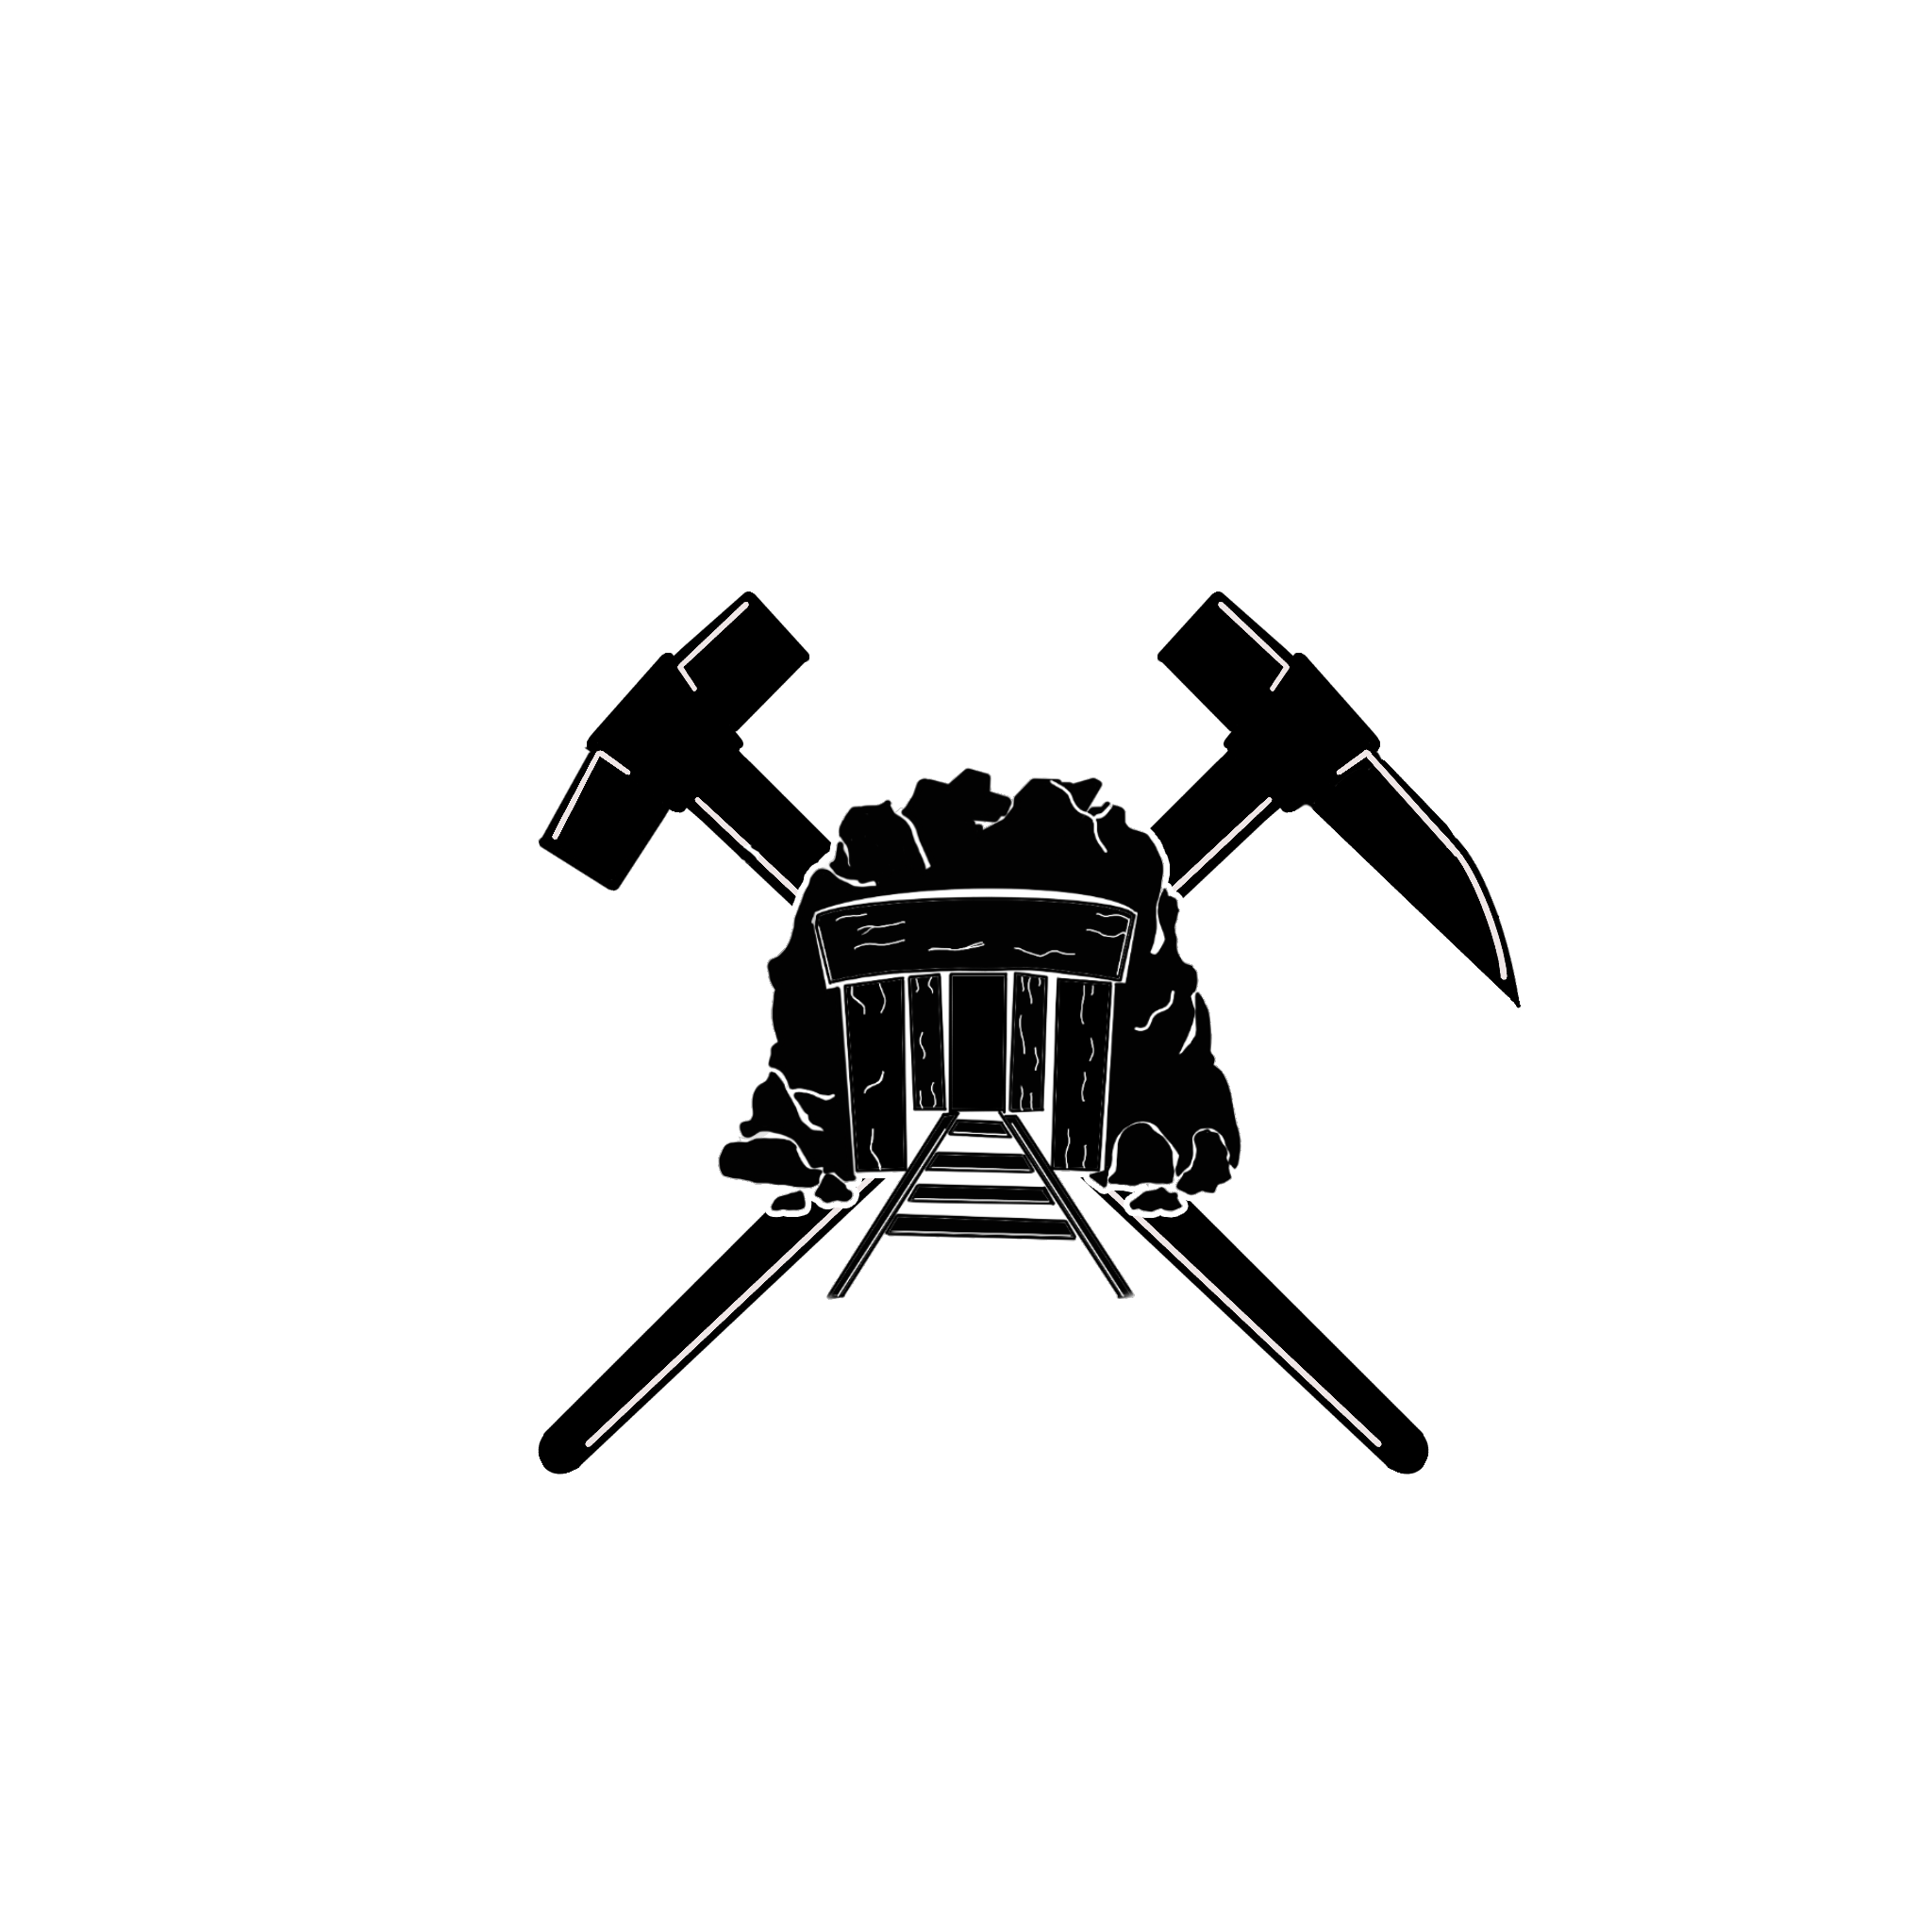 West Allotment Wildlings Facebook group